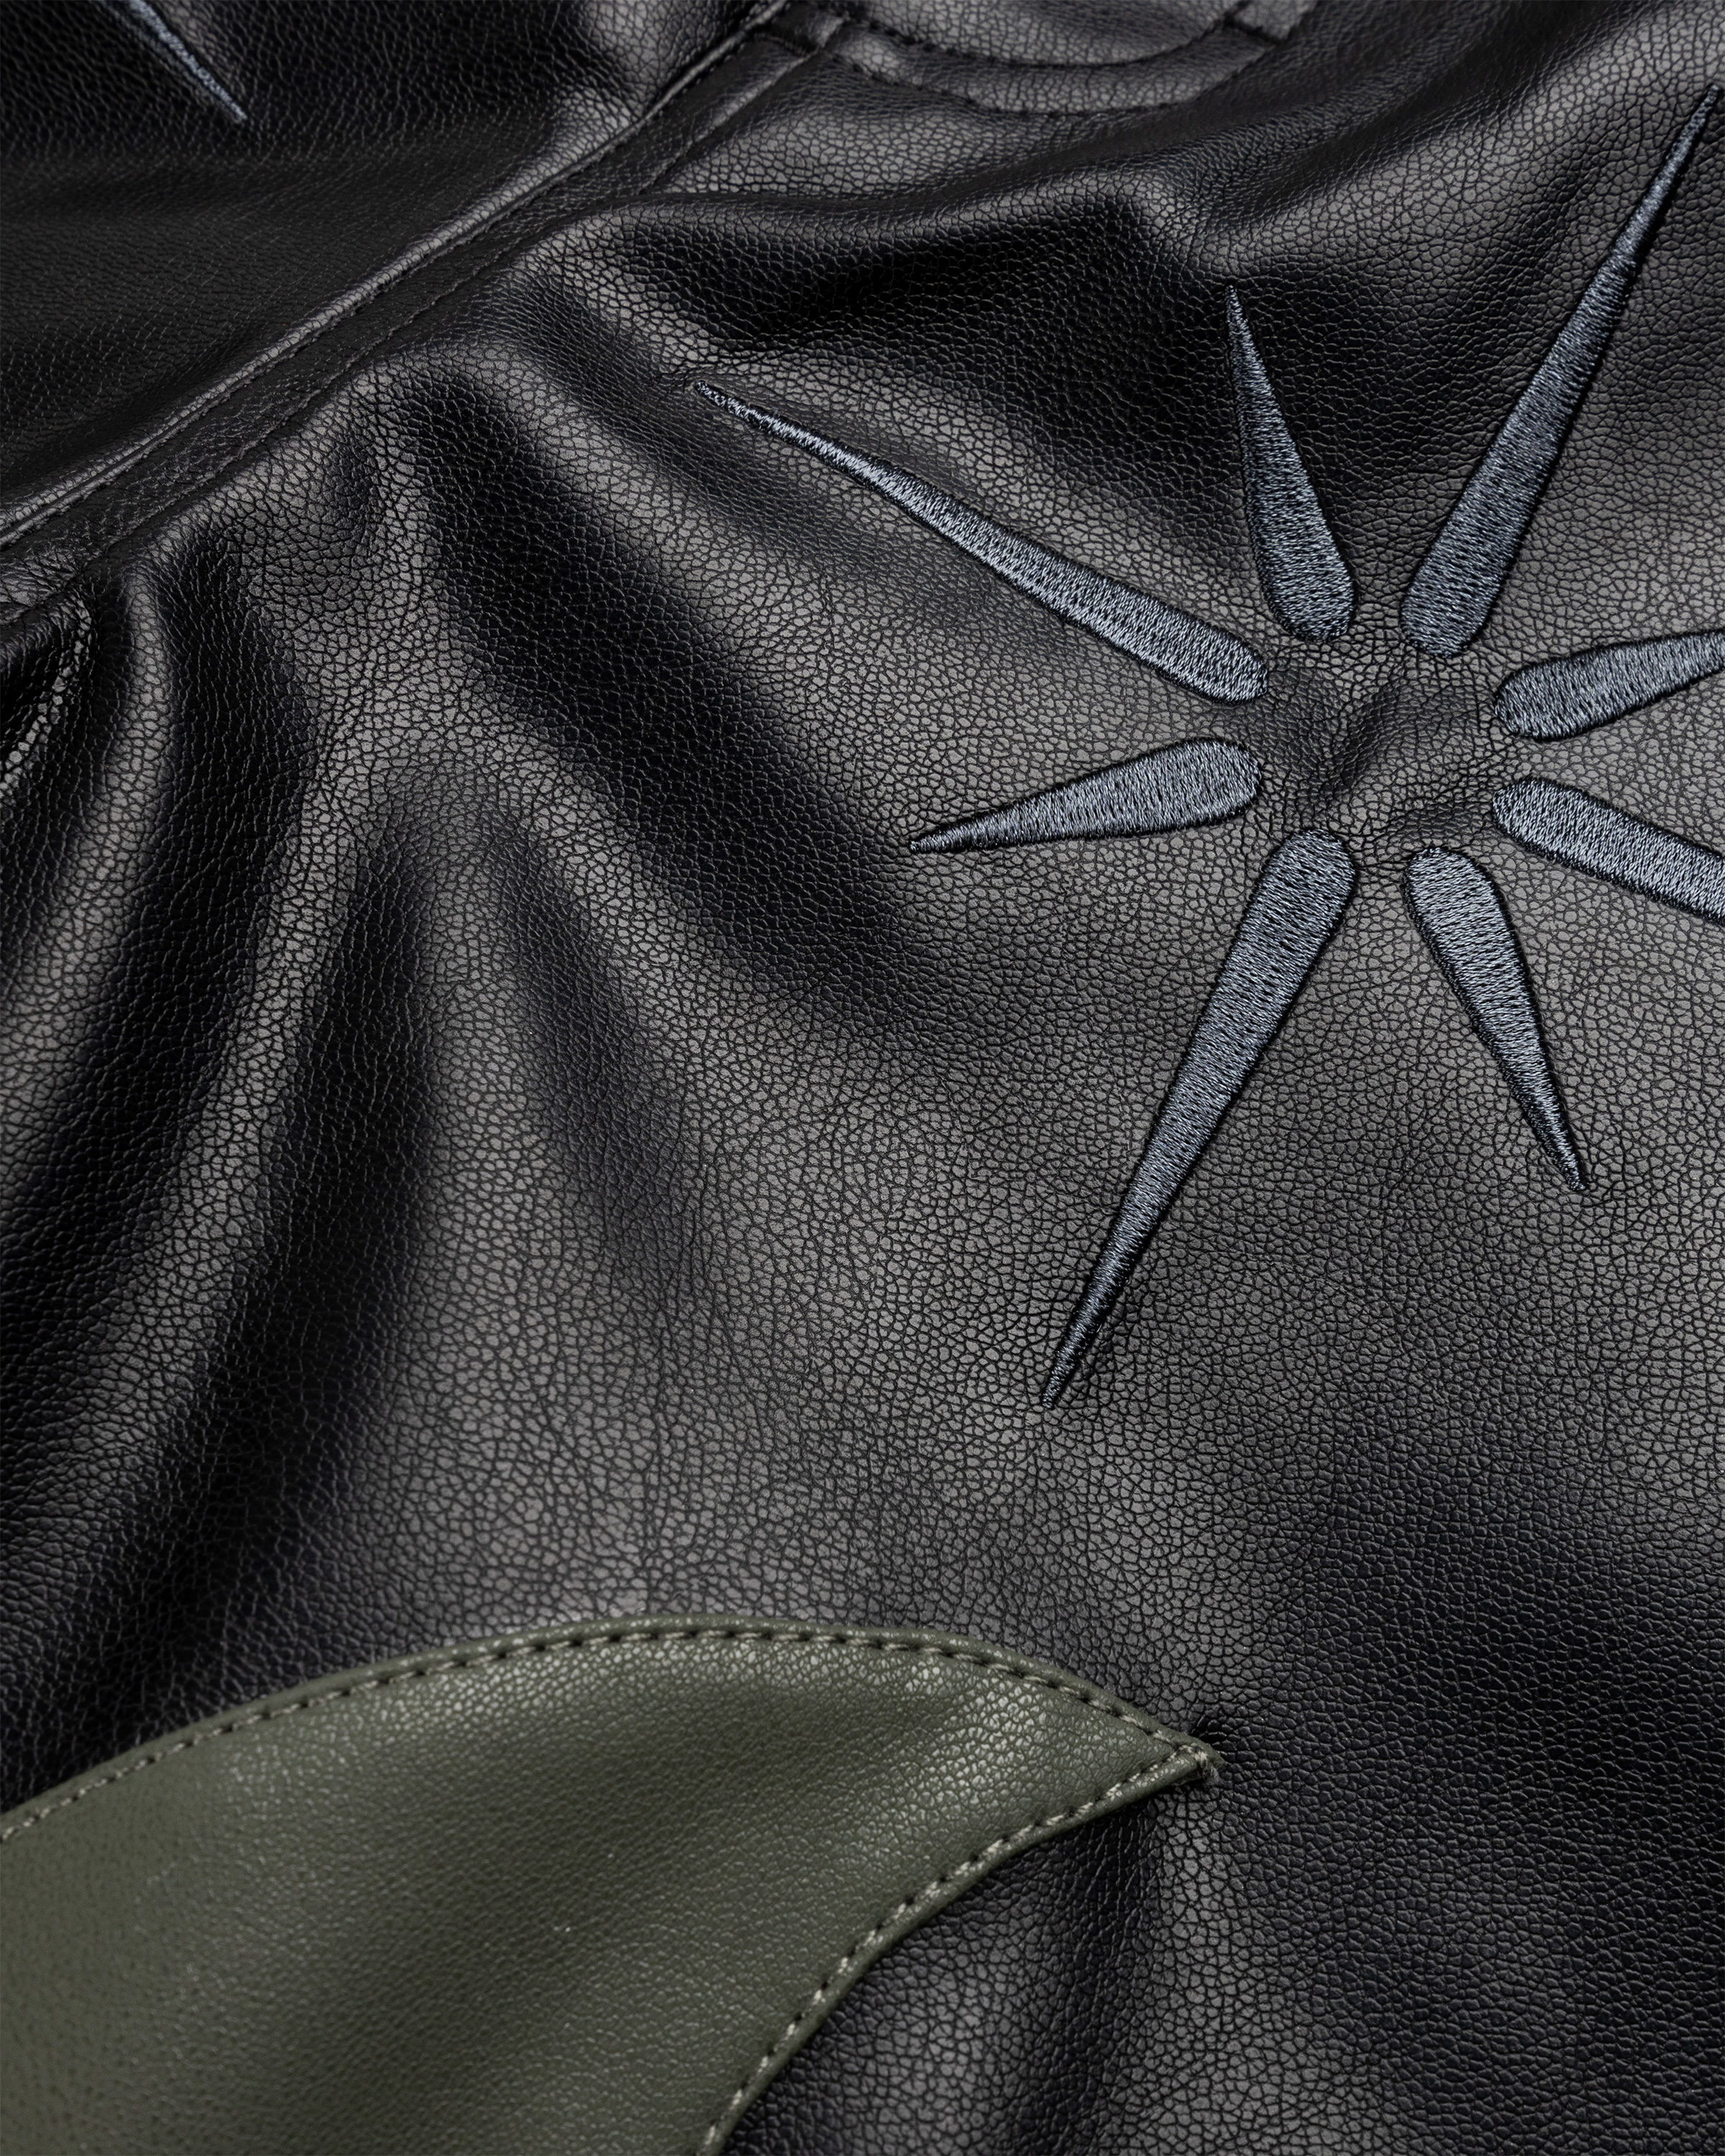 KUSIKOHC – Burn Detail Faux Leather Shorts Black - Shorts - Black - Image 7